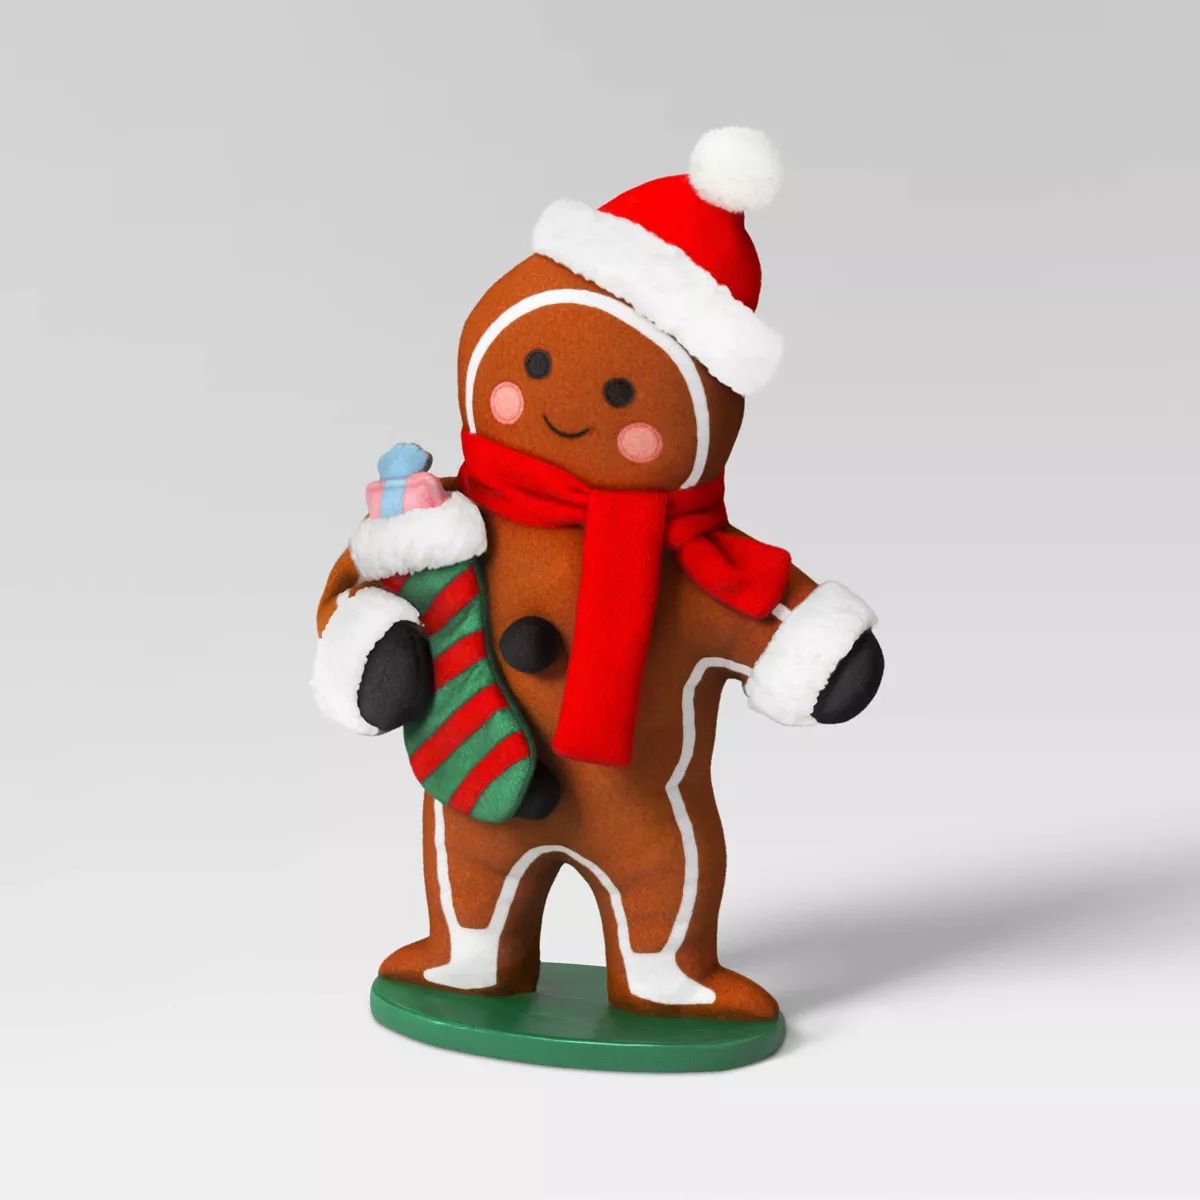 18" Fabric Gingerbread Man Holding Stocking Decorative Christmas Sculpture - Wondershop™ Brown | Target